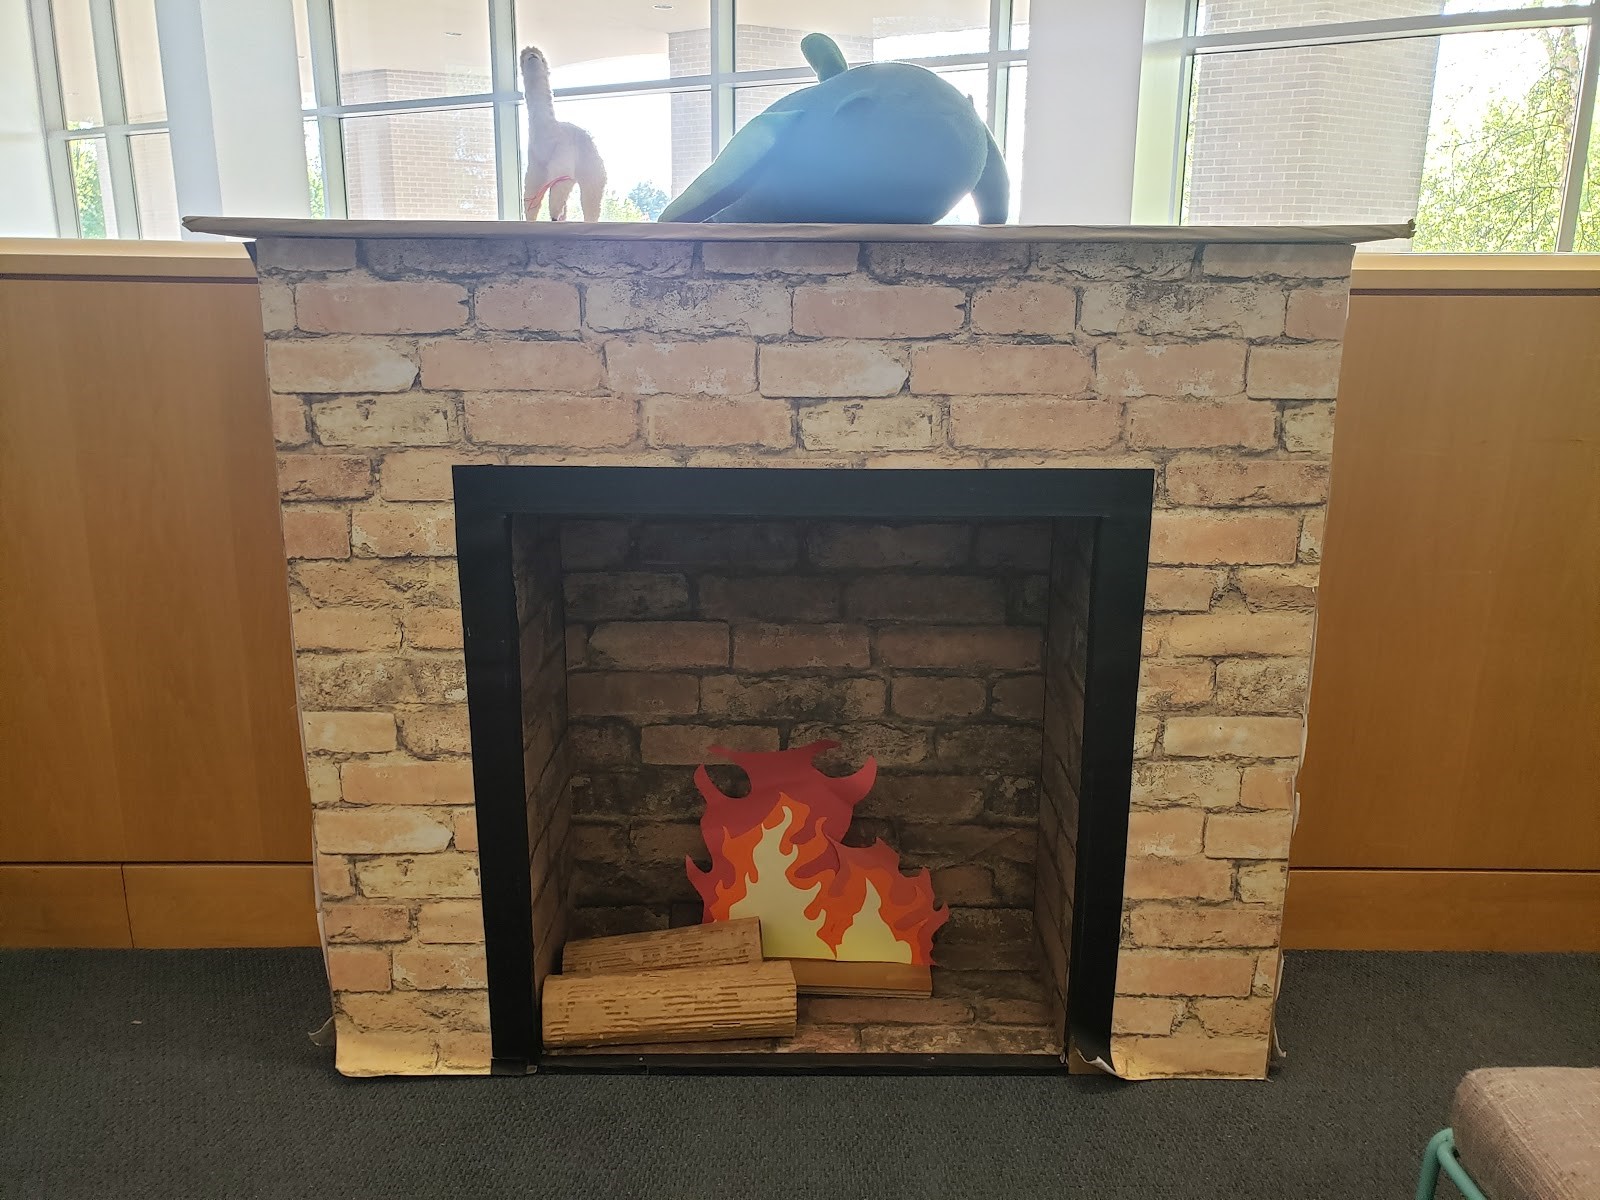 A fake fireplace prop.